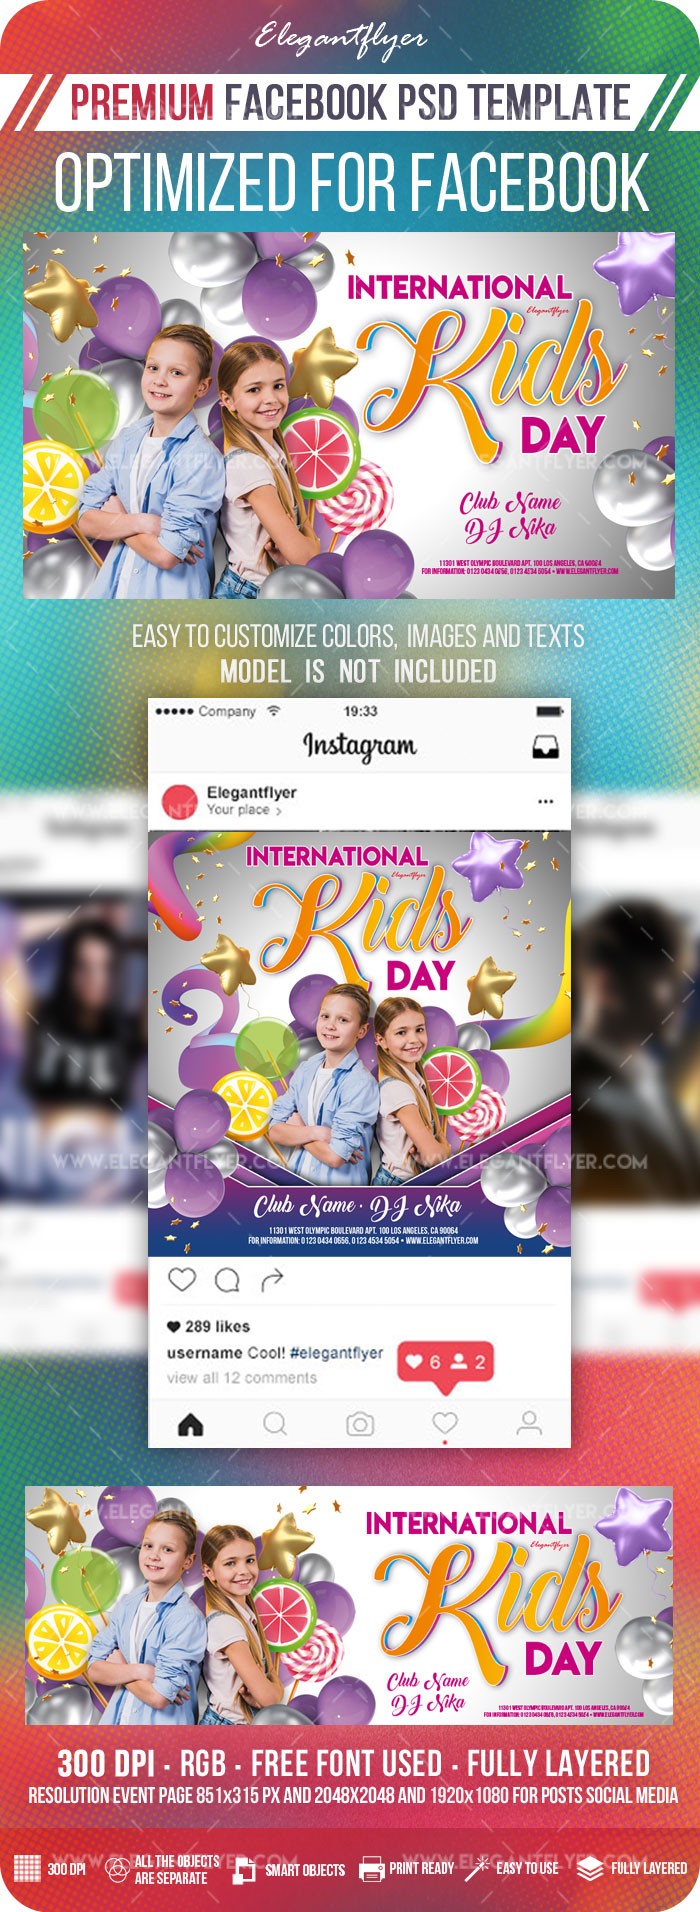 International Kids Day Invitation Facebook by ElegantFlyer